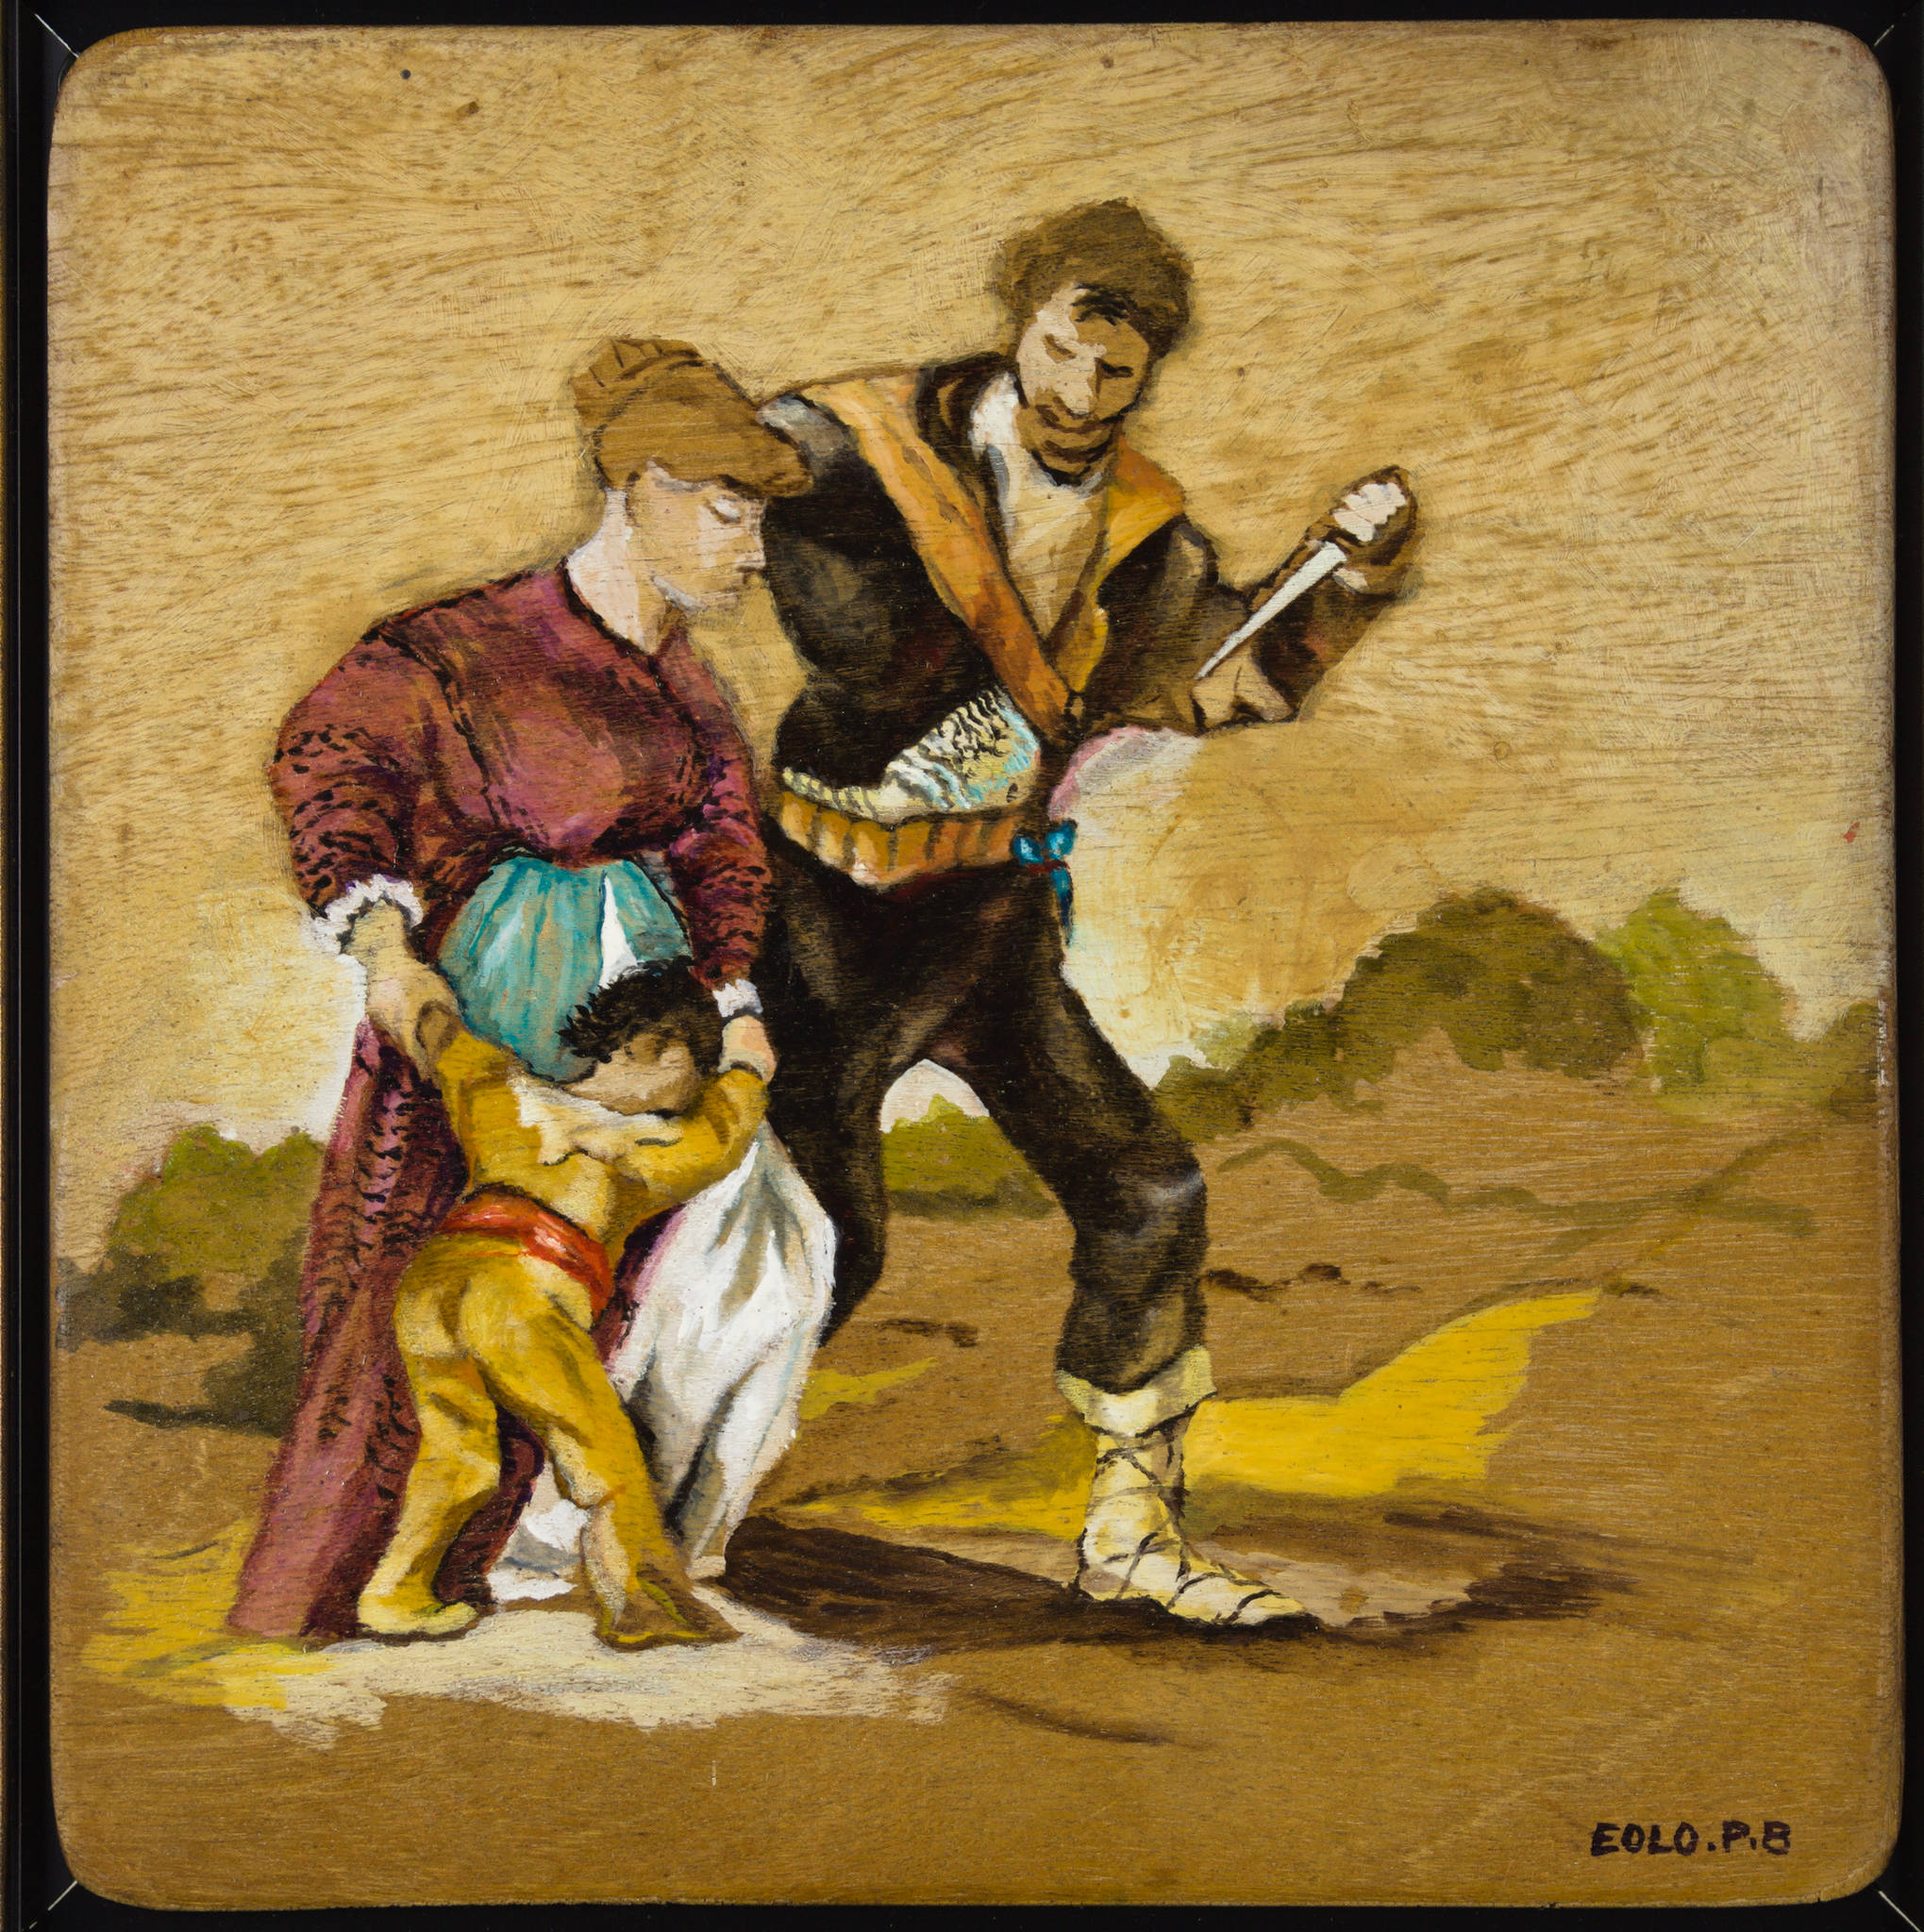 Eolo Paul Bottaro 'After Goya'